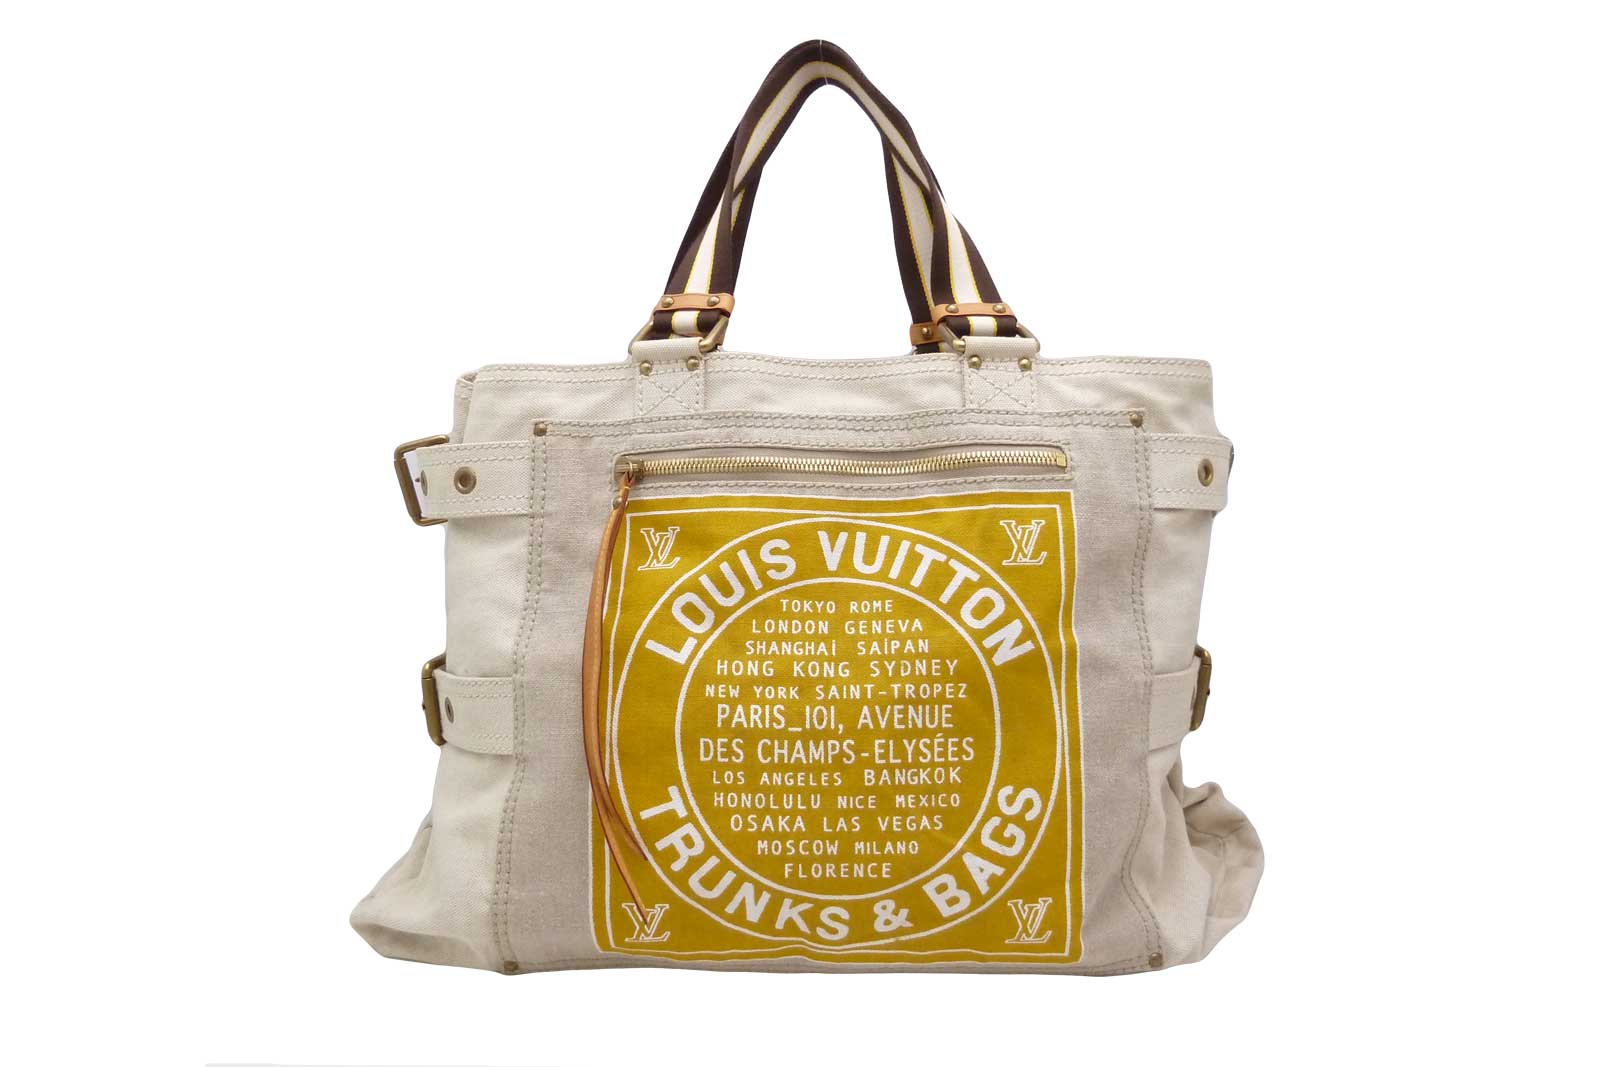 Auth Louis Vuitton Cruise Collection Globe Shopper Cabas Tote Bag Beige - e11151 | eBay